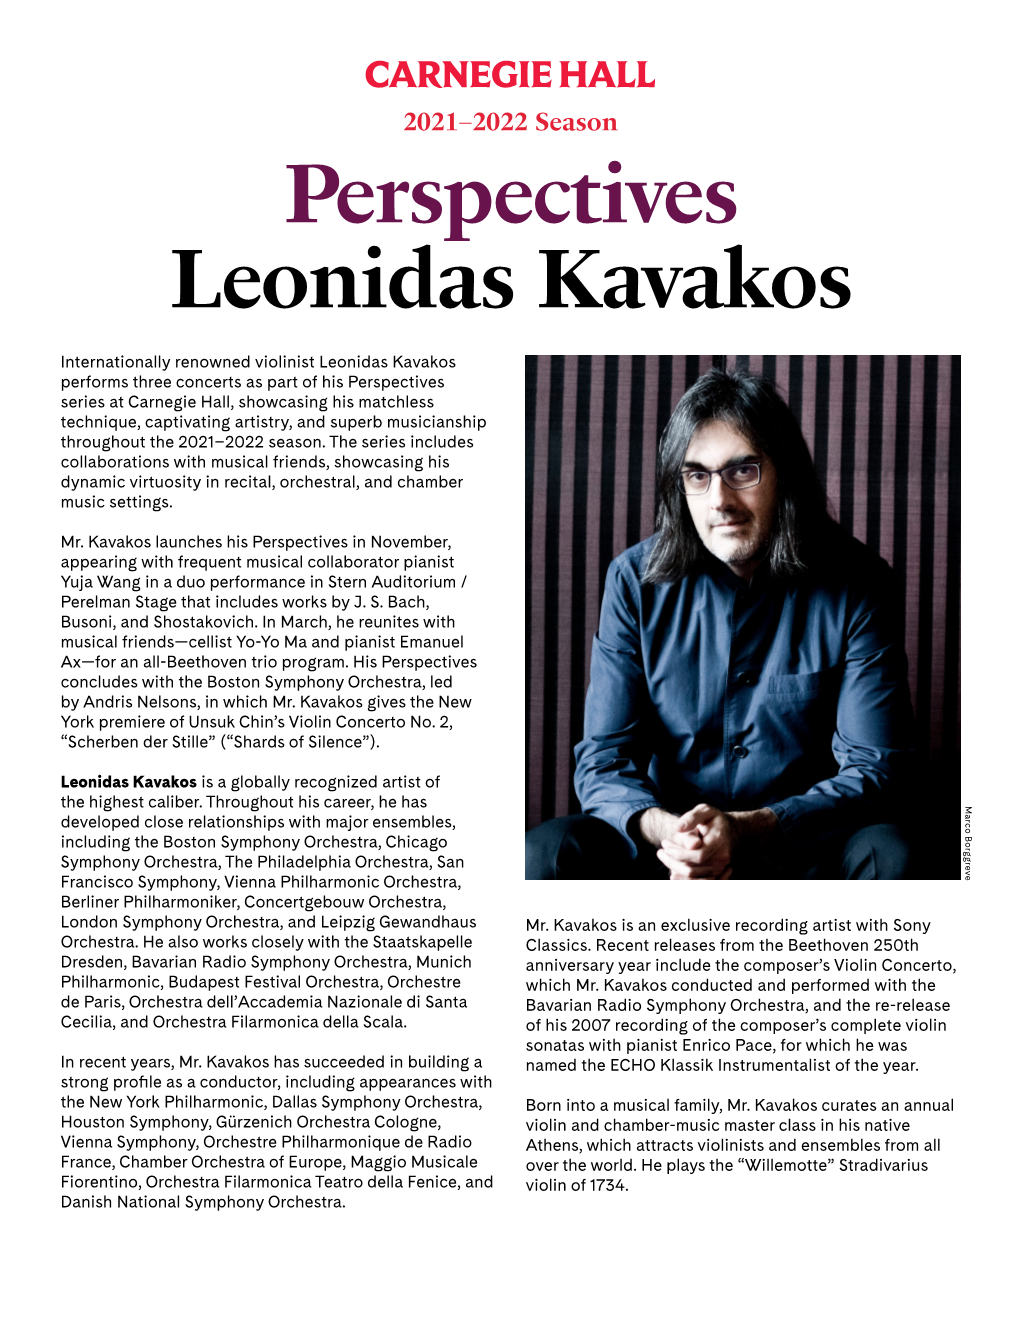 2021–2022 Perspectives: Leonidas Kavakos